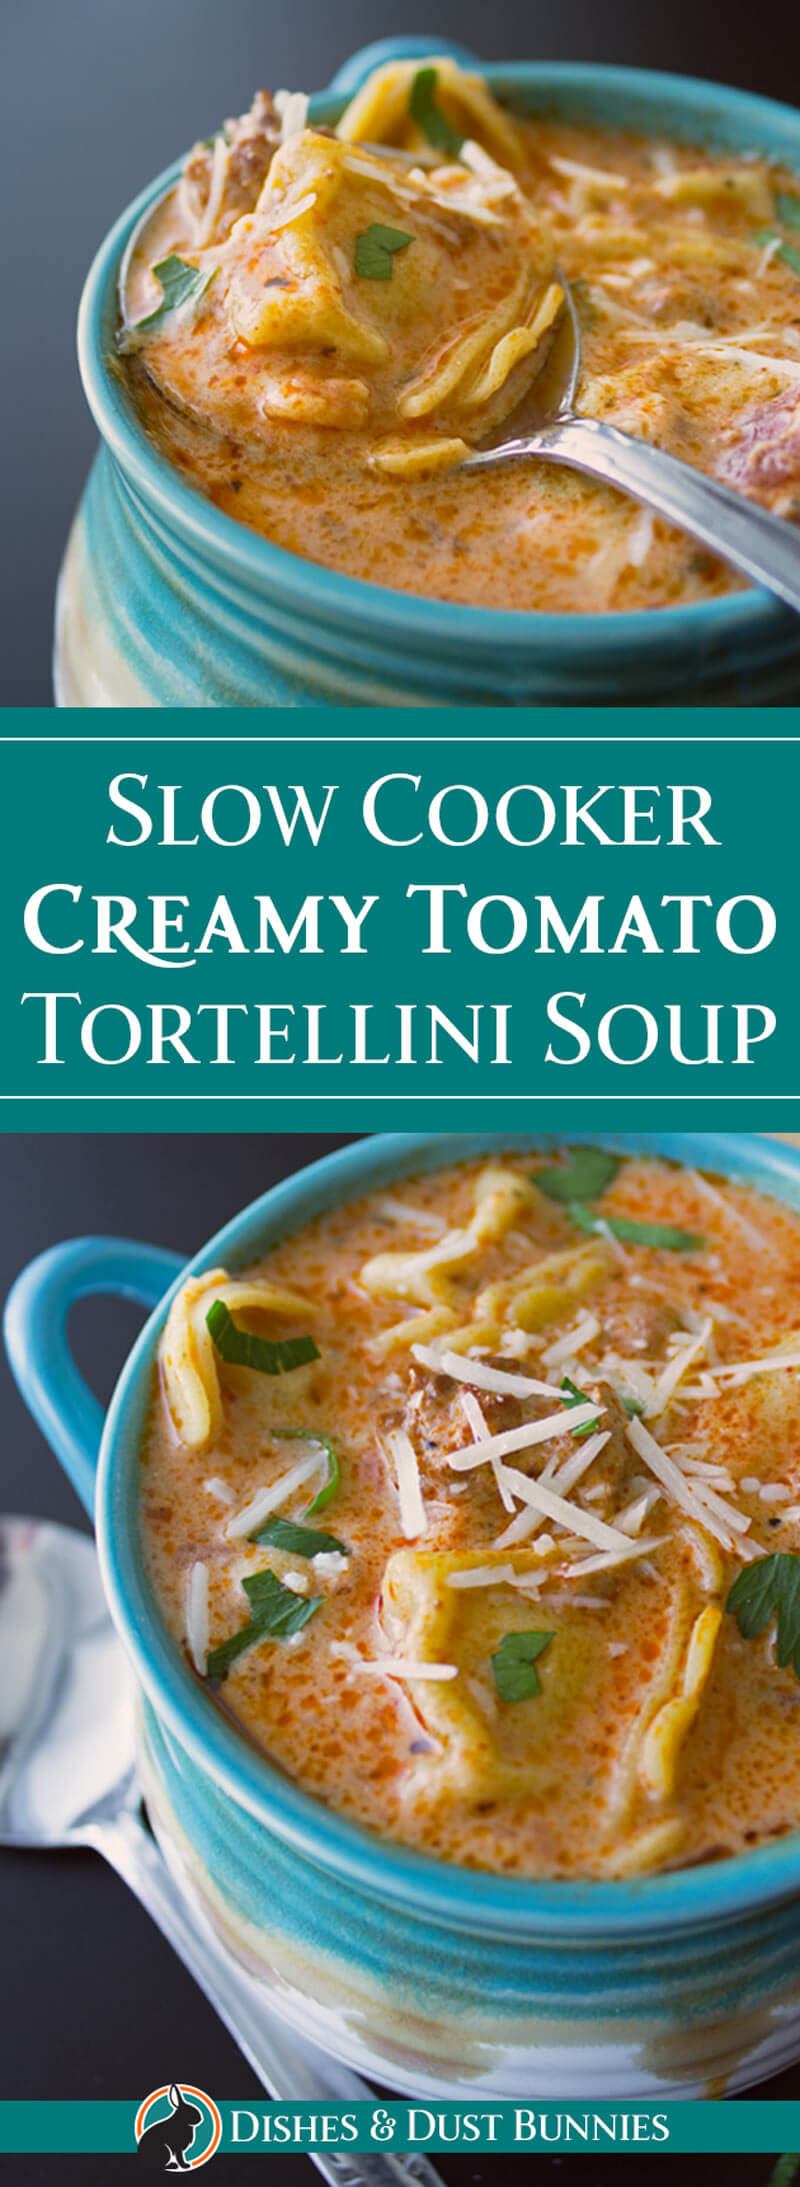 Slow Cooker Creamy Tomato Tortellini Soup from dishesanddustbunnies.com